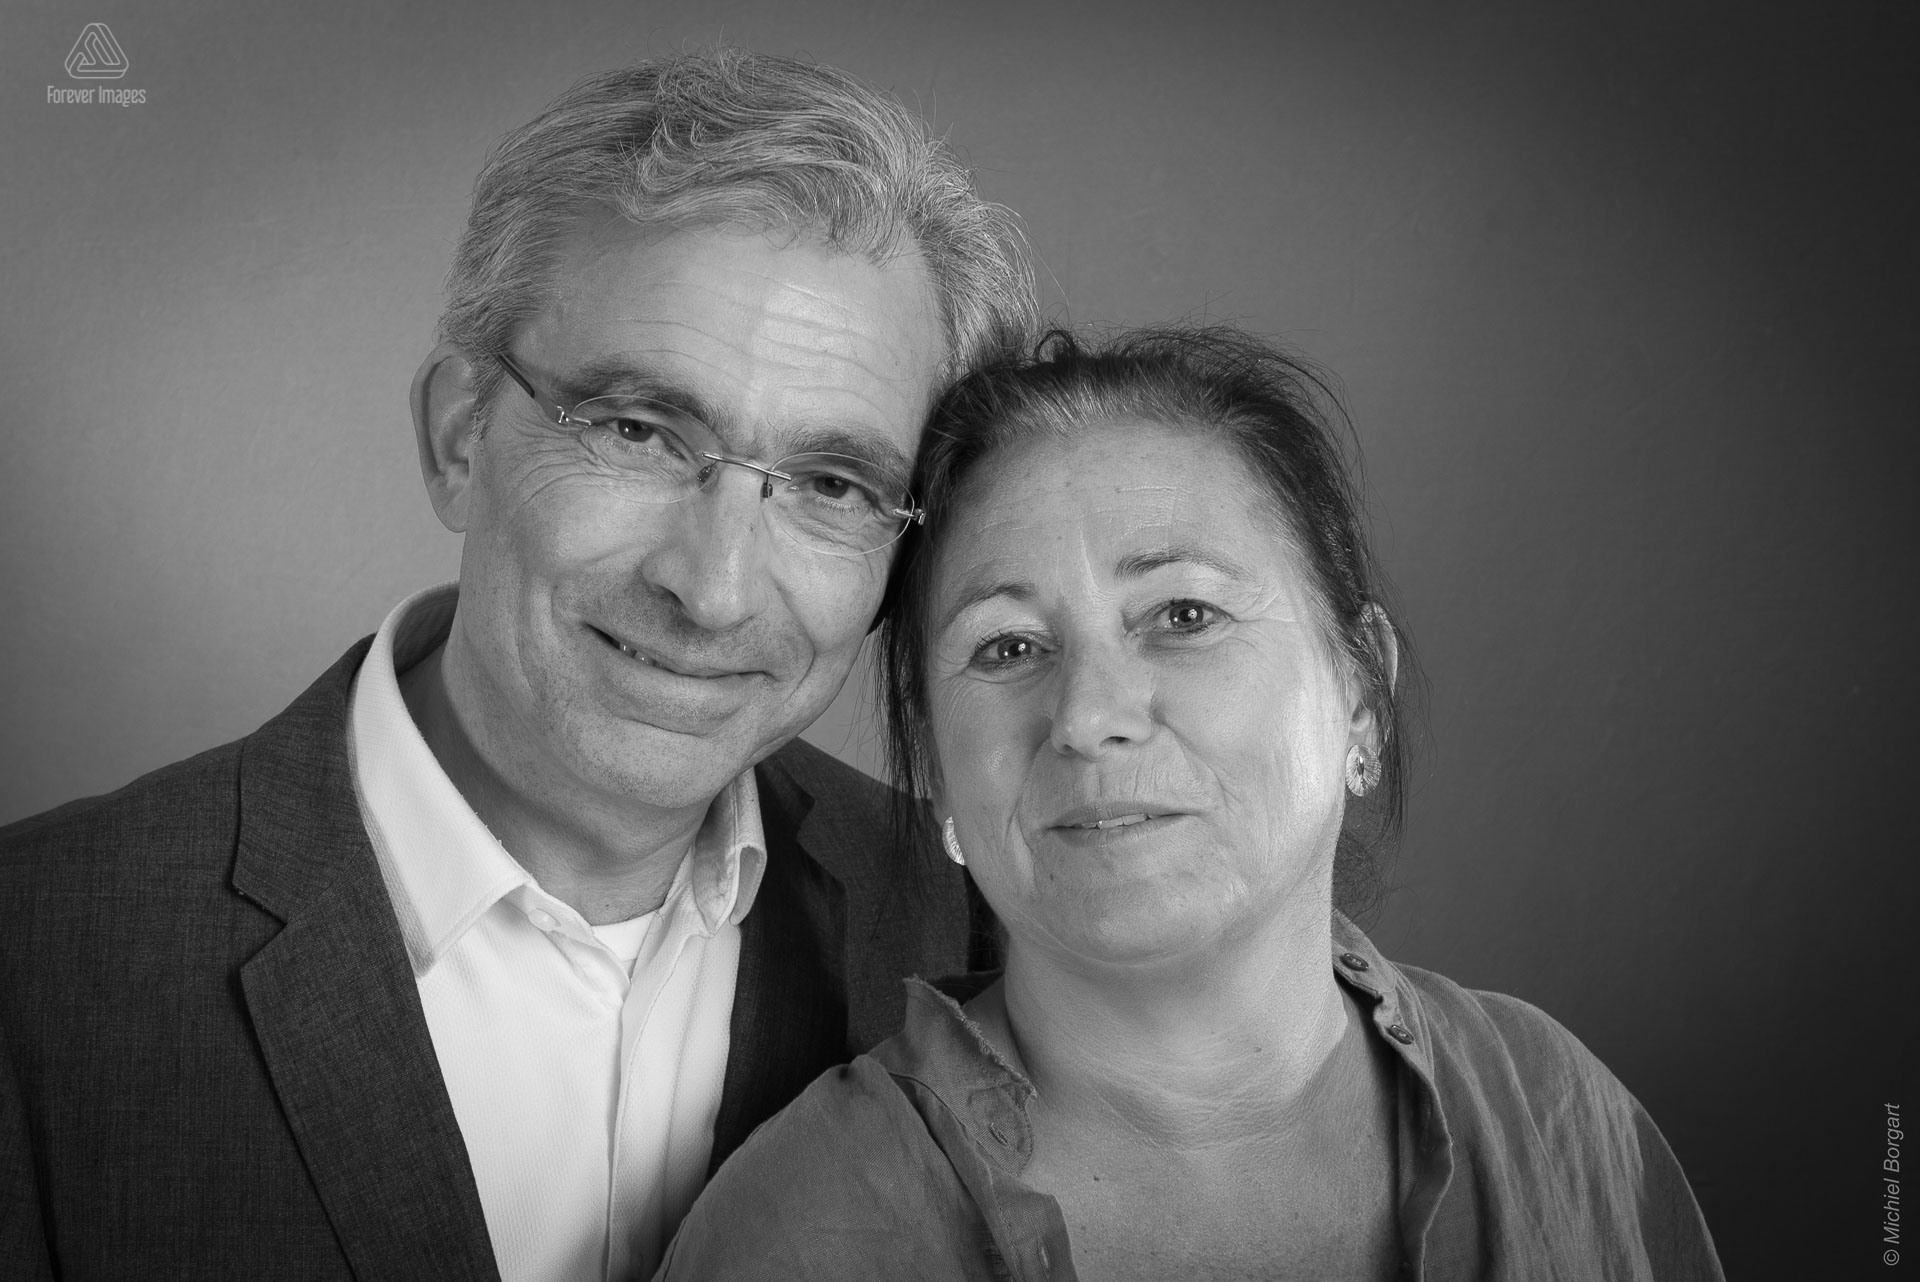 Loveshoot in zwart-wit vriendelijk echtpaar | Bas | Portretfotograaf Michiel Borgart - Forever Images.